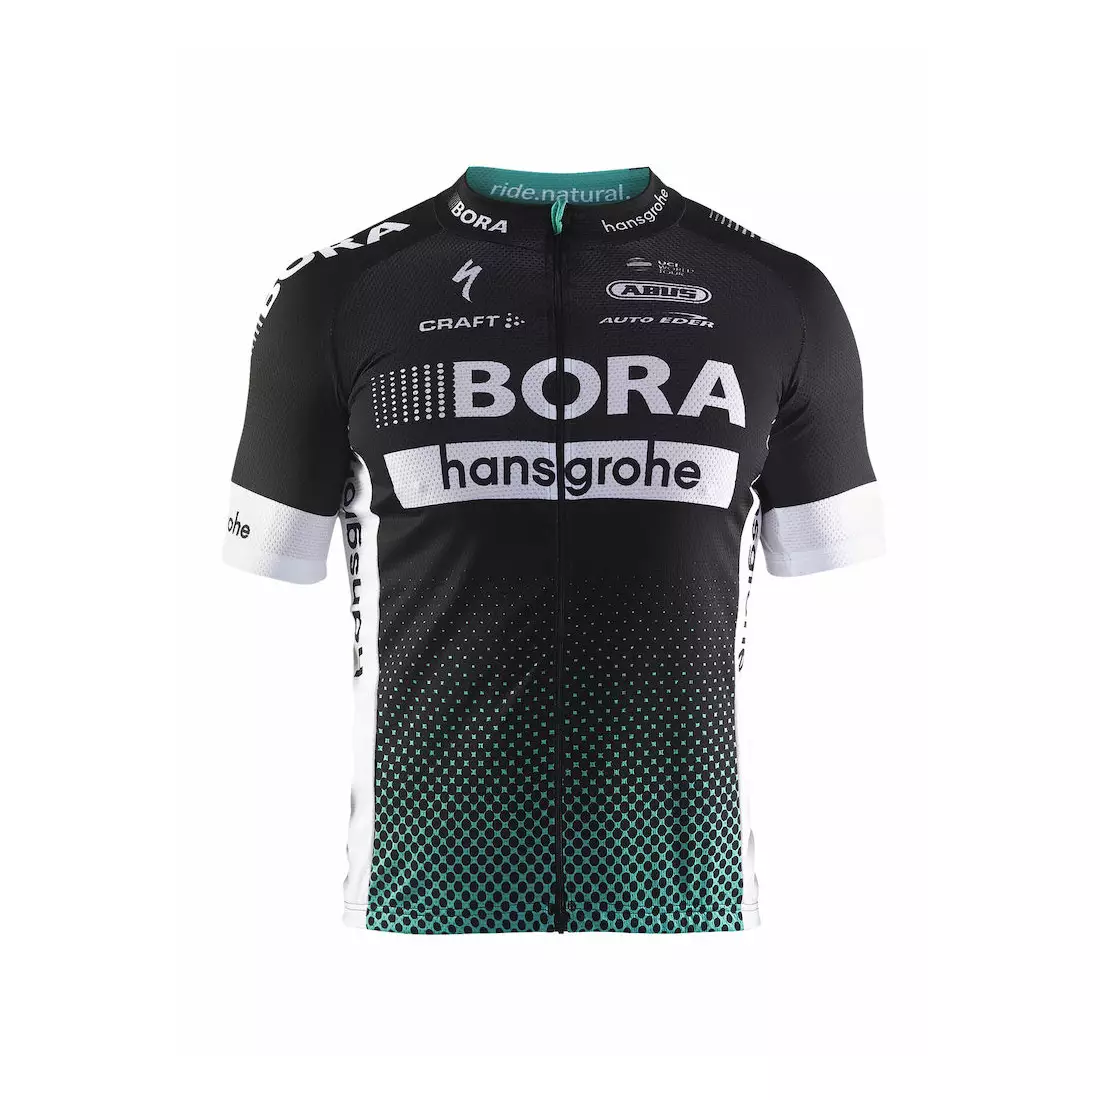 CRAFT BORA HANSGROHE 1906104-9999 men's cycling jersey - Replica